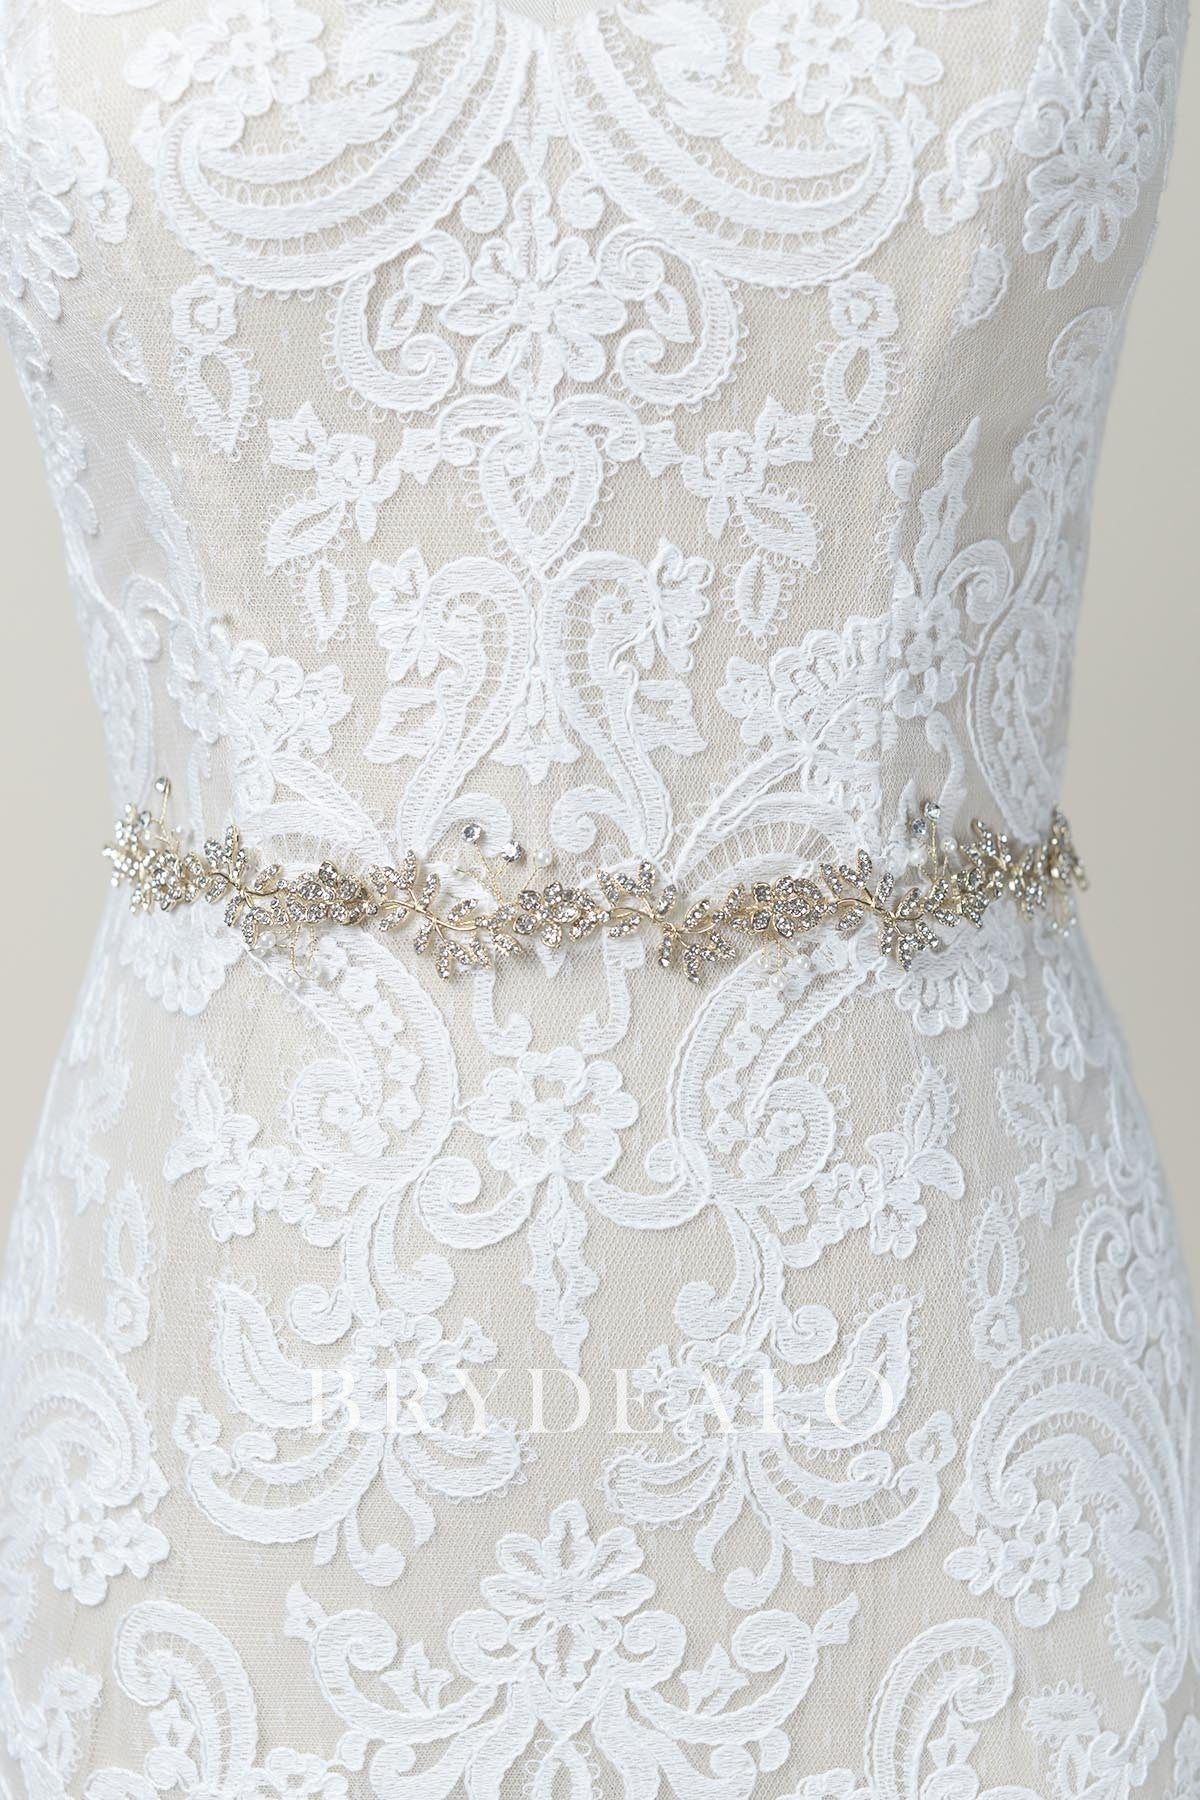 Elegant Golden Vine Bridal Sash with Crystals and Pearls